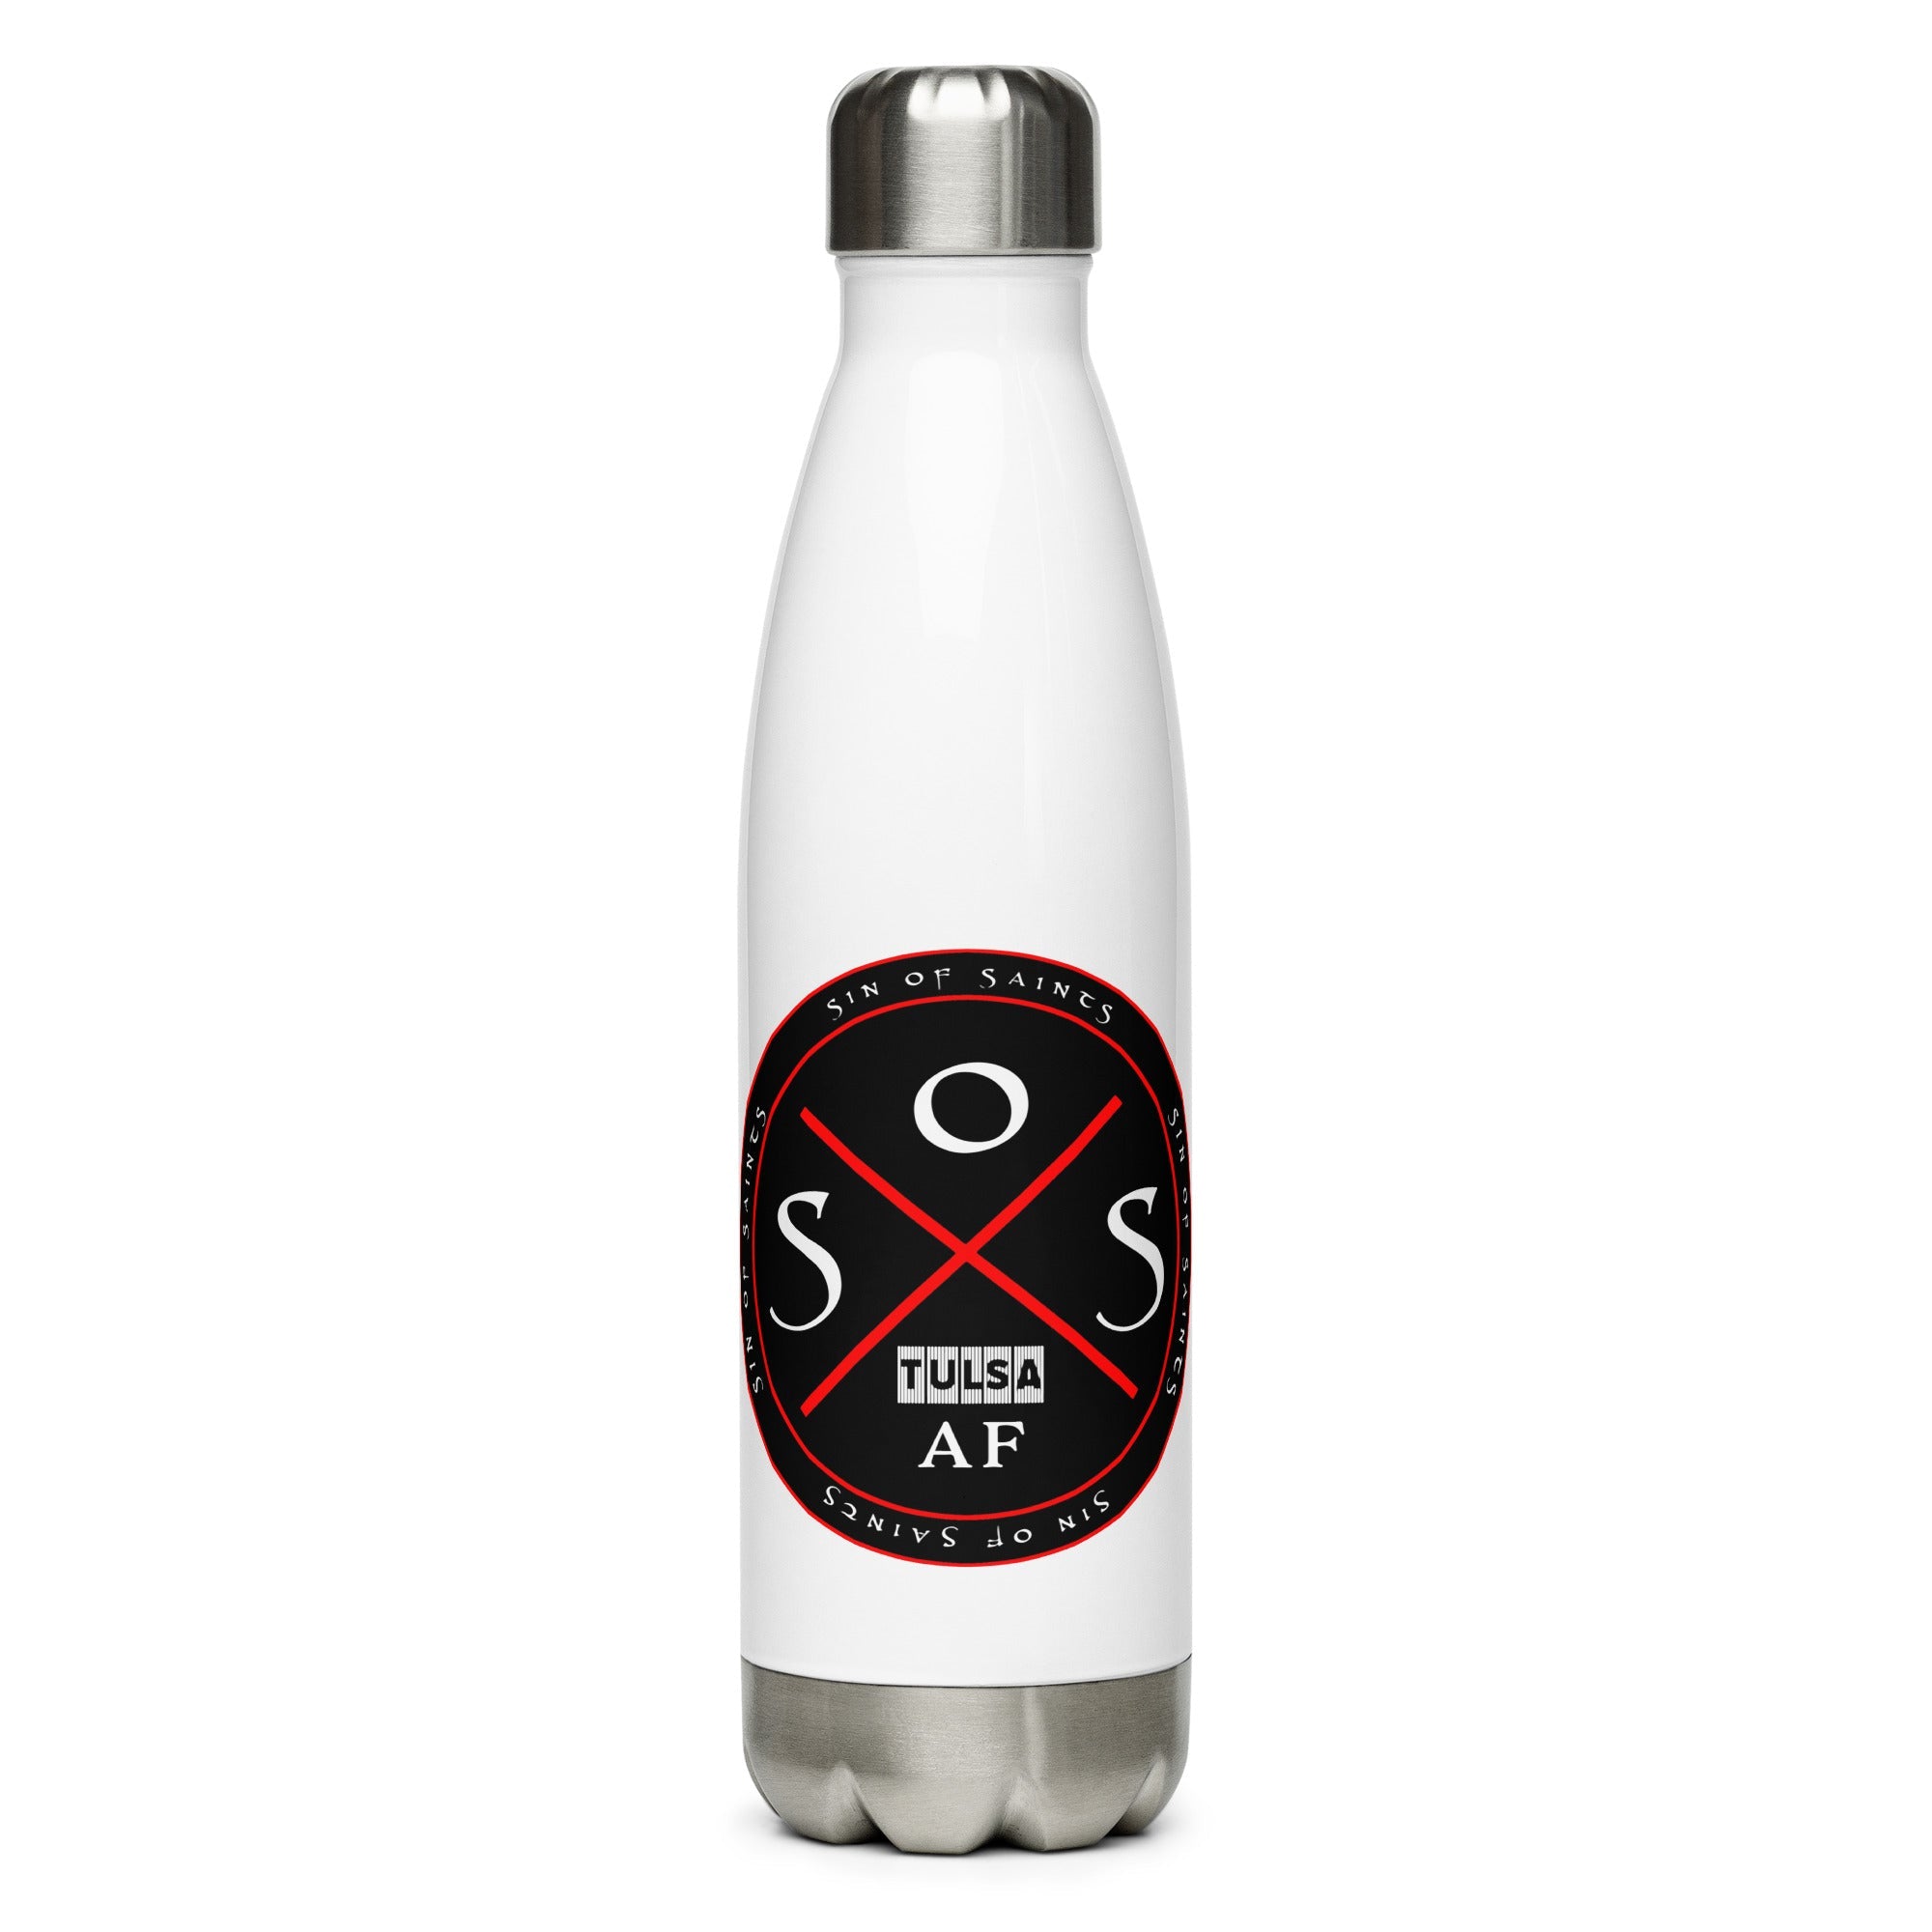 SOS Stainless Steel Water Bottle